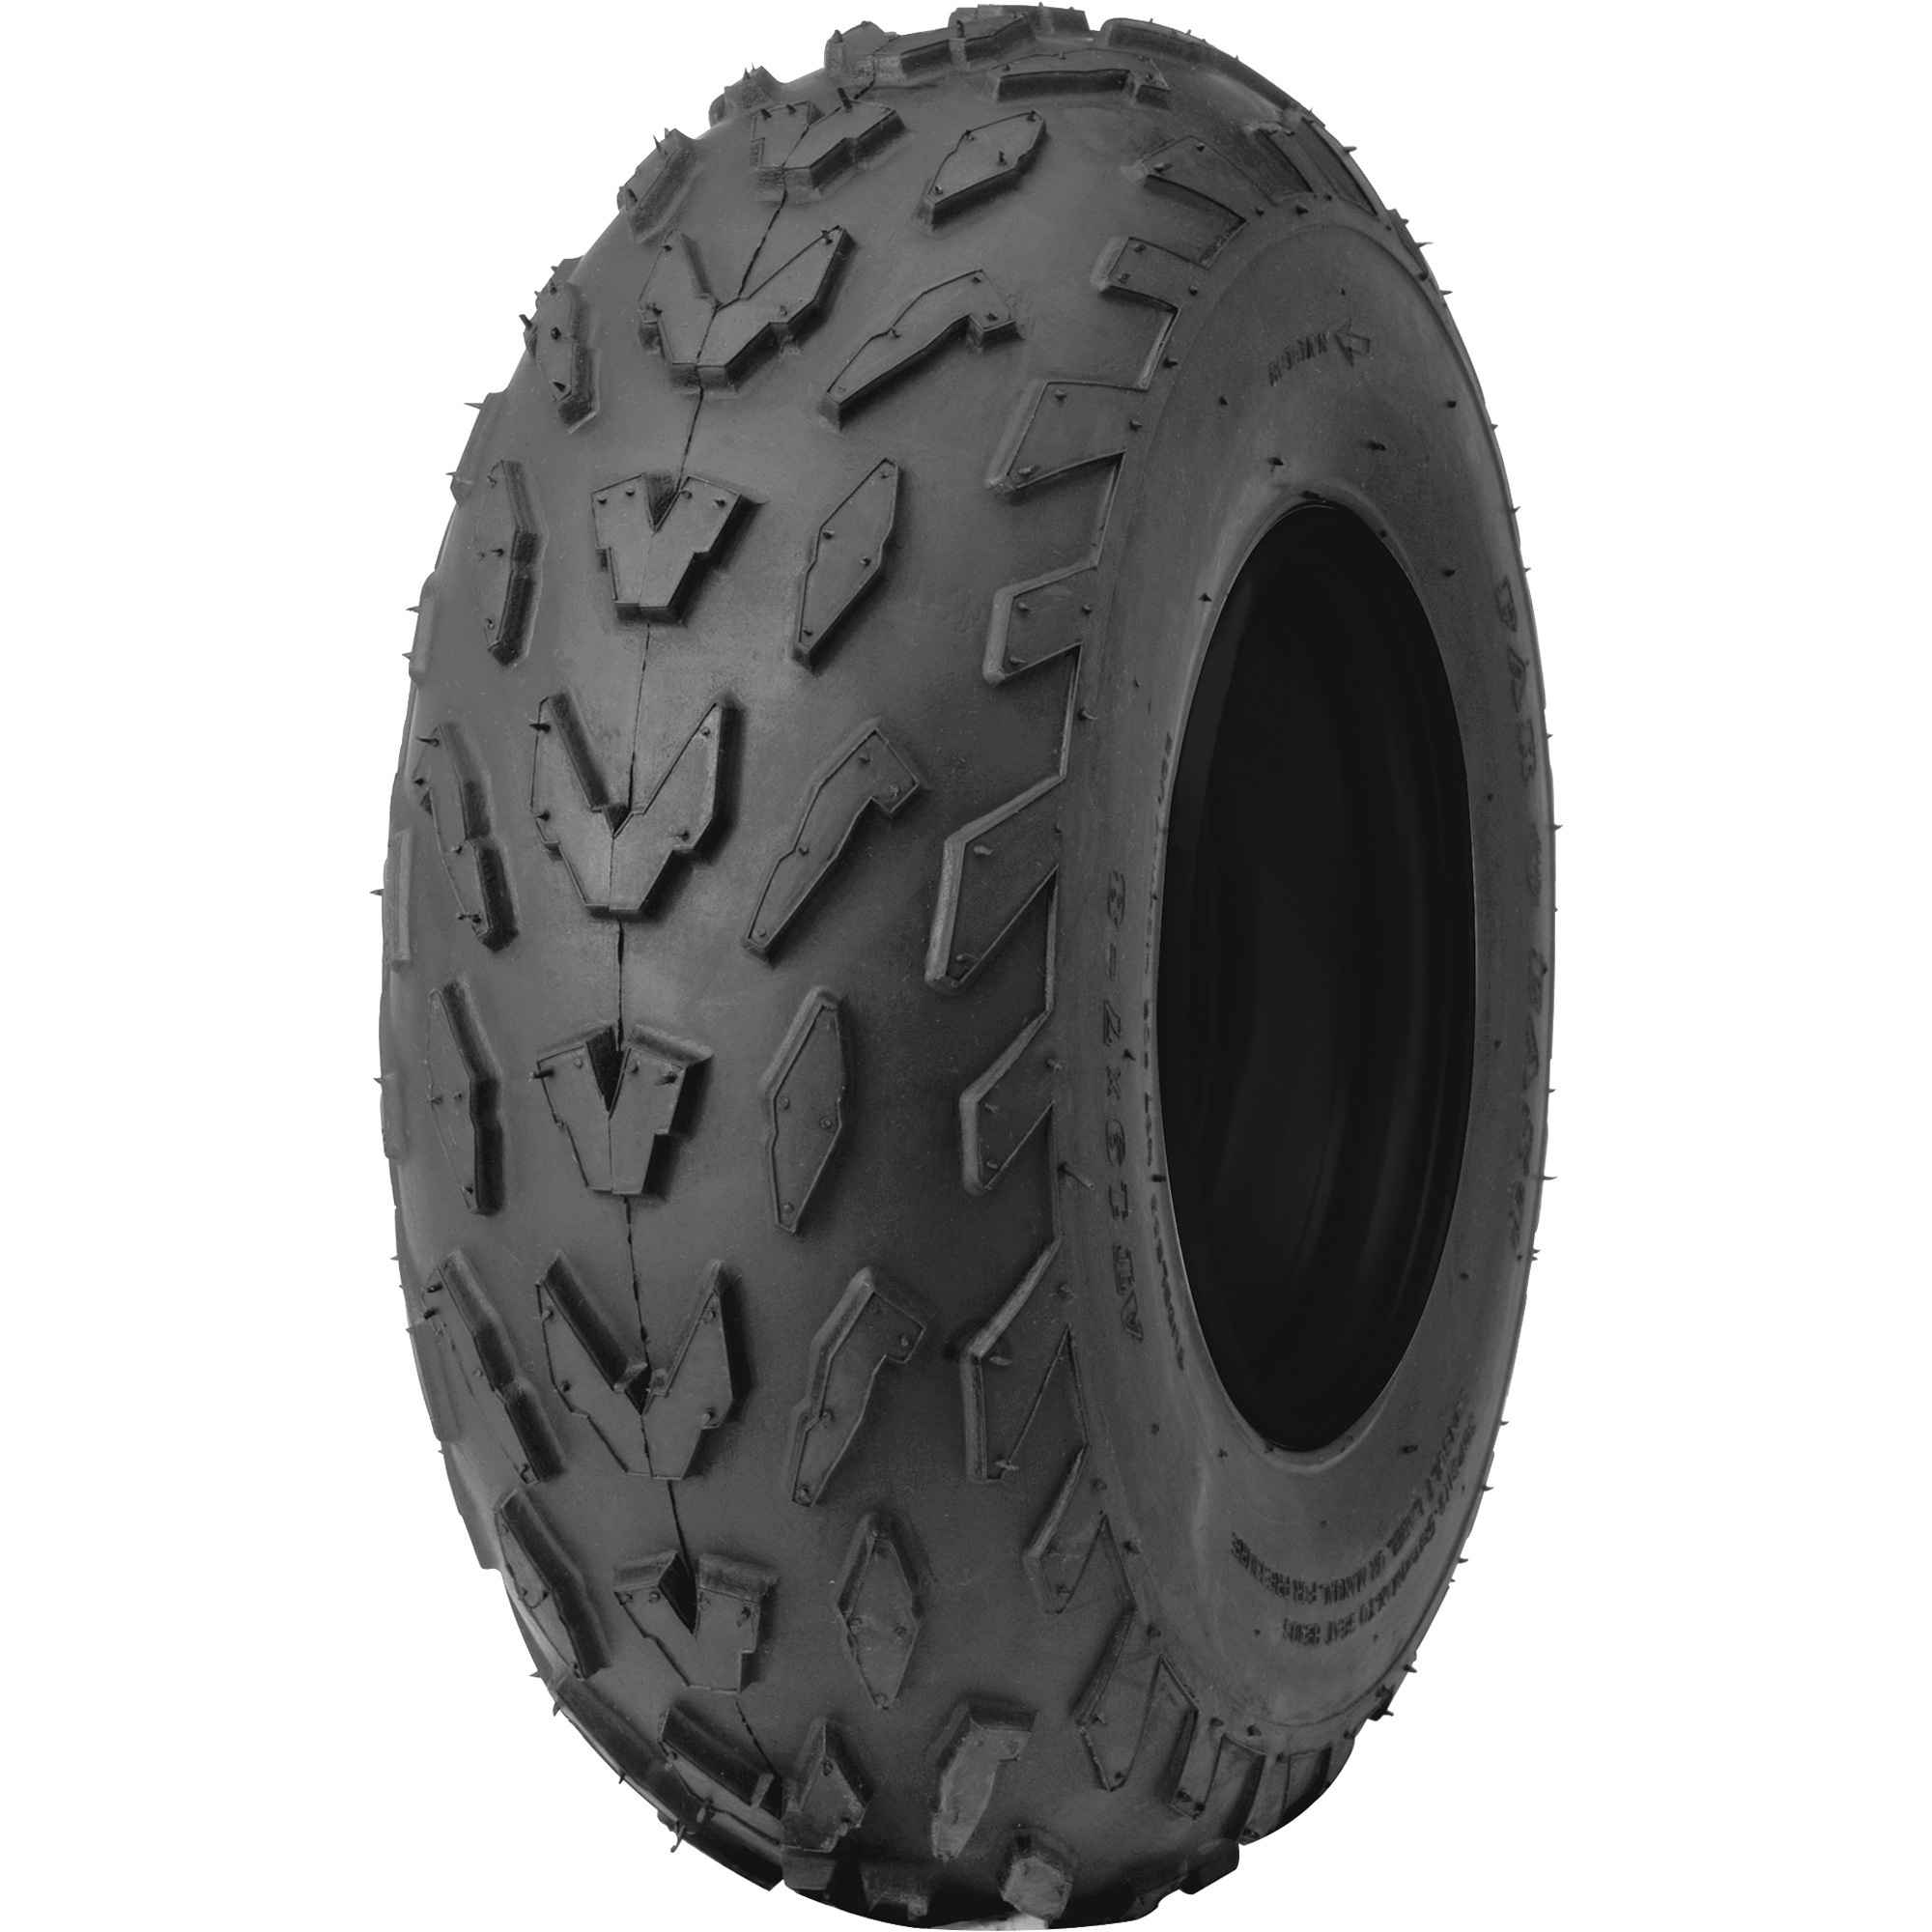 Knobby ATV Tire Great for Rough Terrain, 20 x 7.00-8